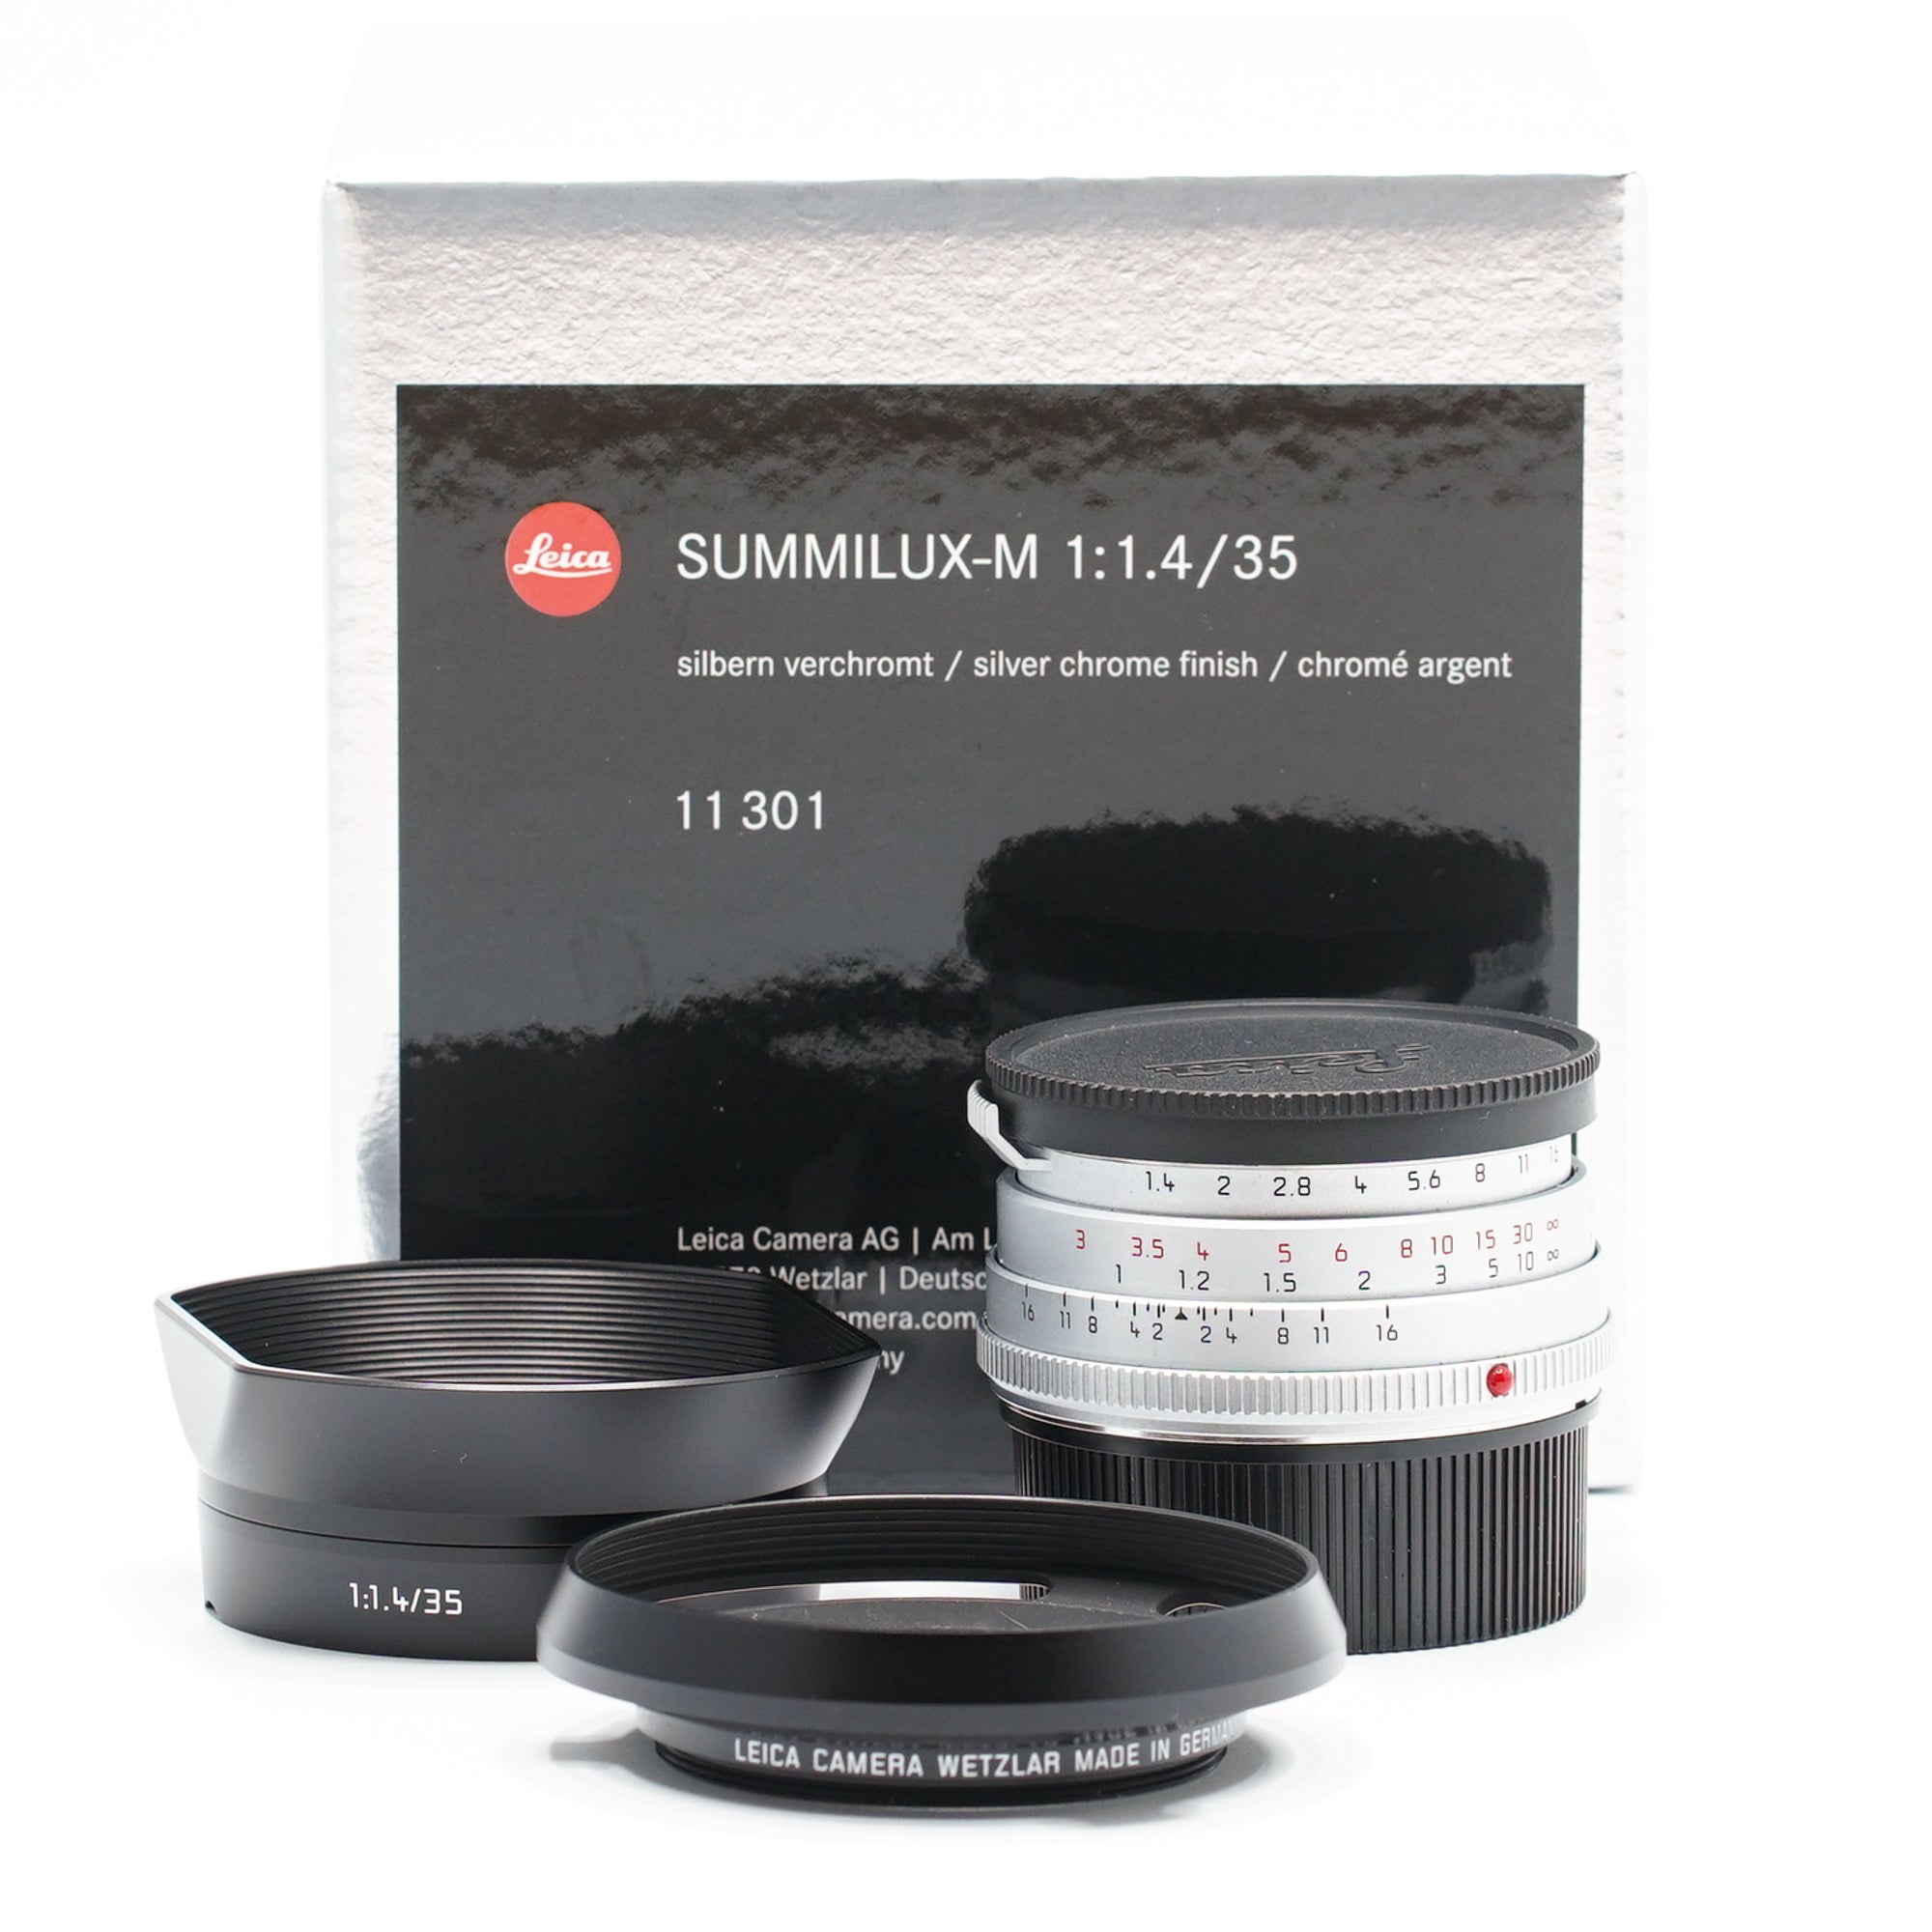 Leica Summilux-M 35mm F1.4 silber verchromt